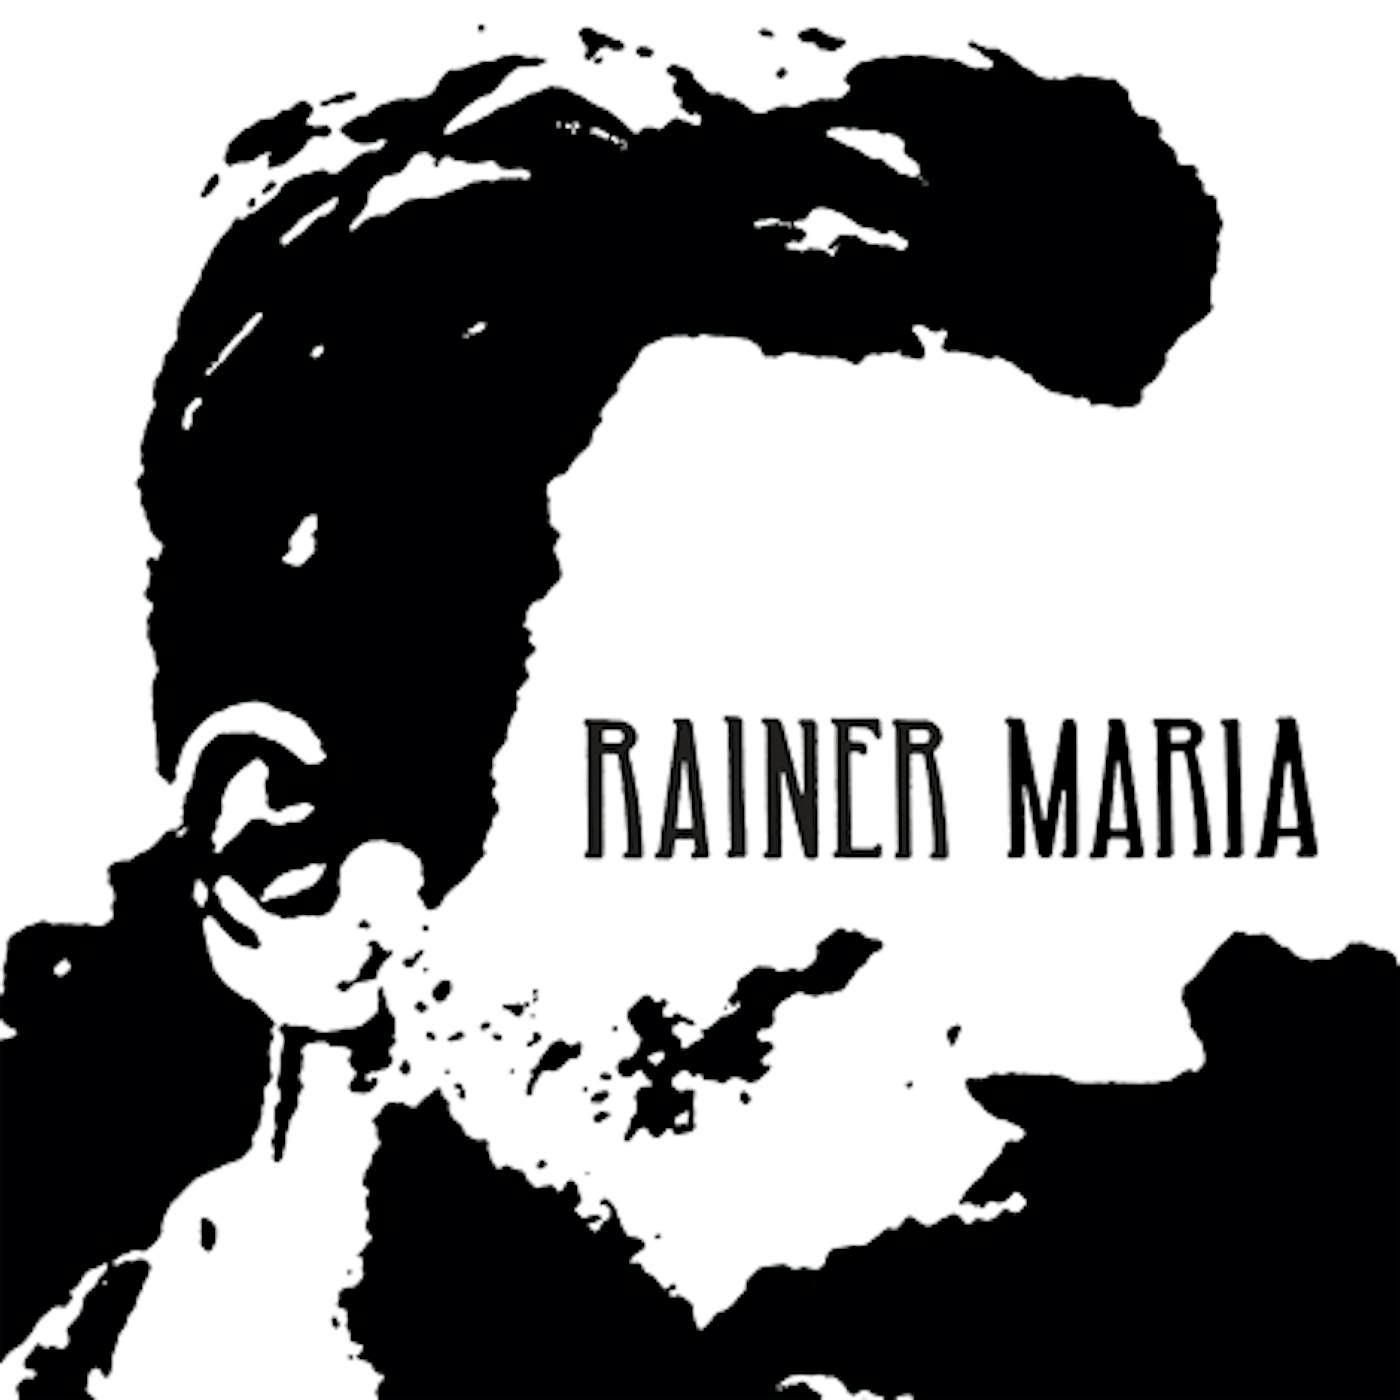 Rainer Maria Catastrophe Keeps Us Together (Vinyl)